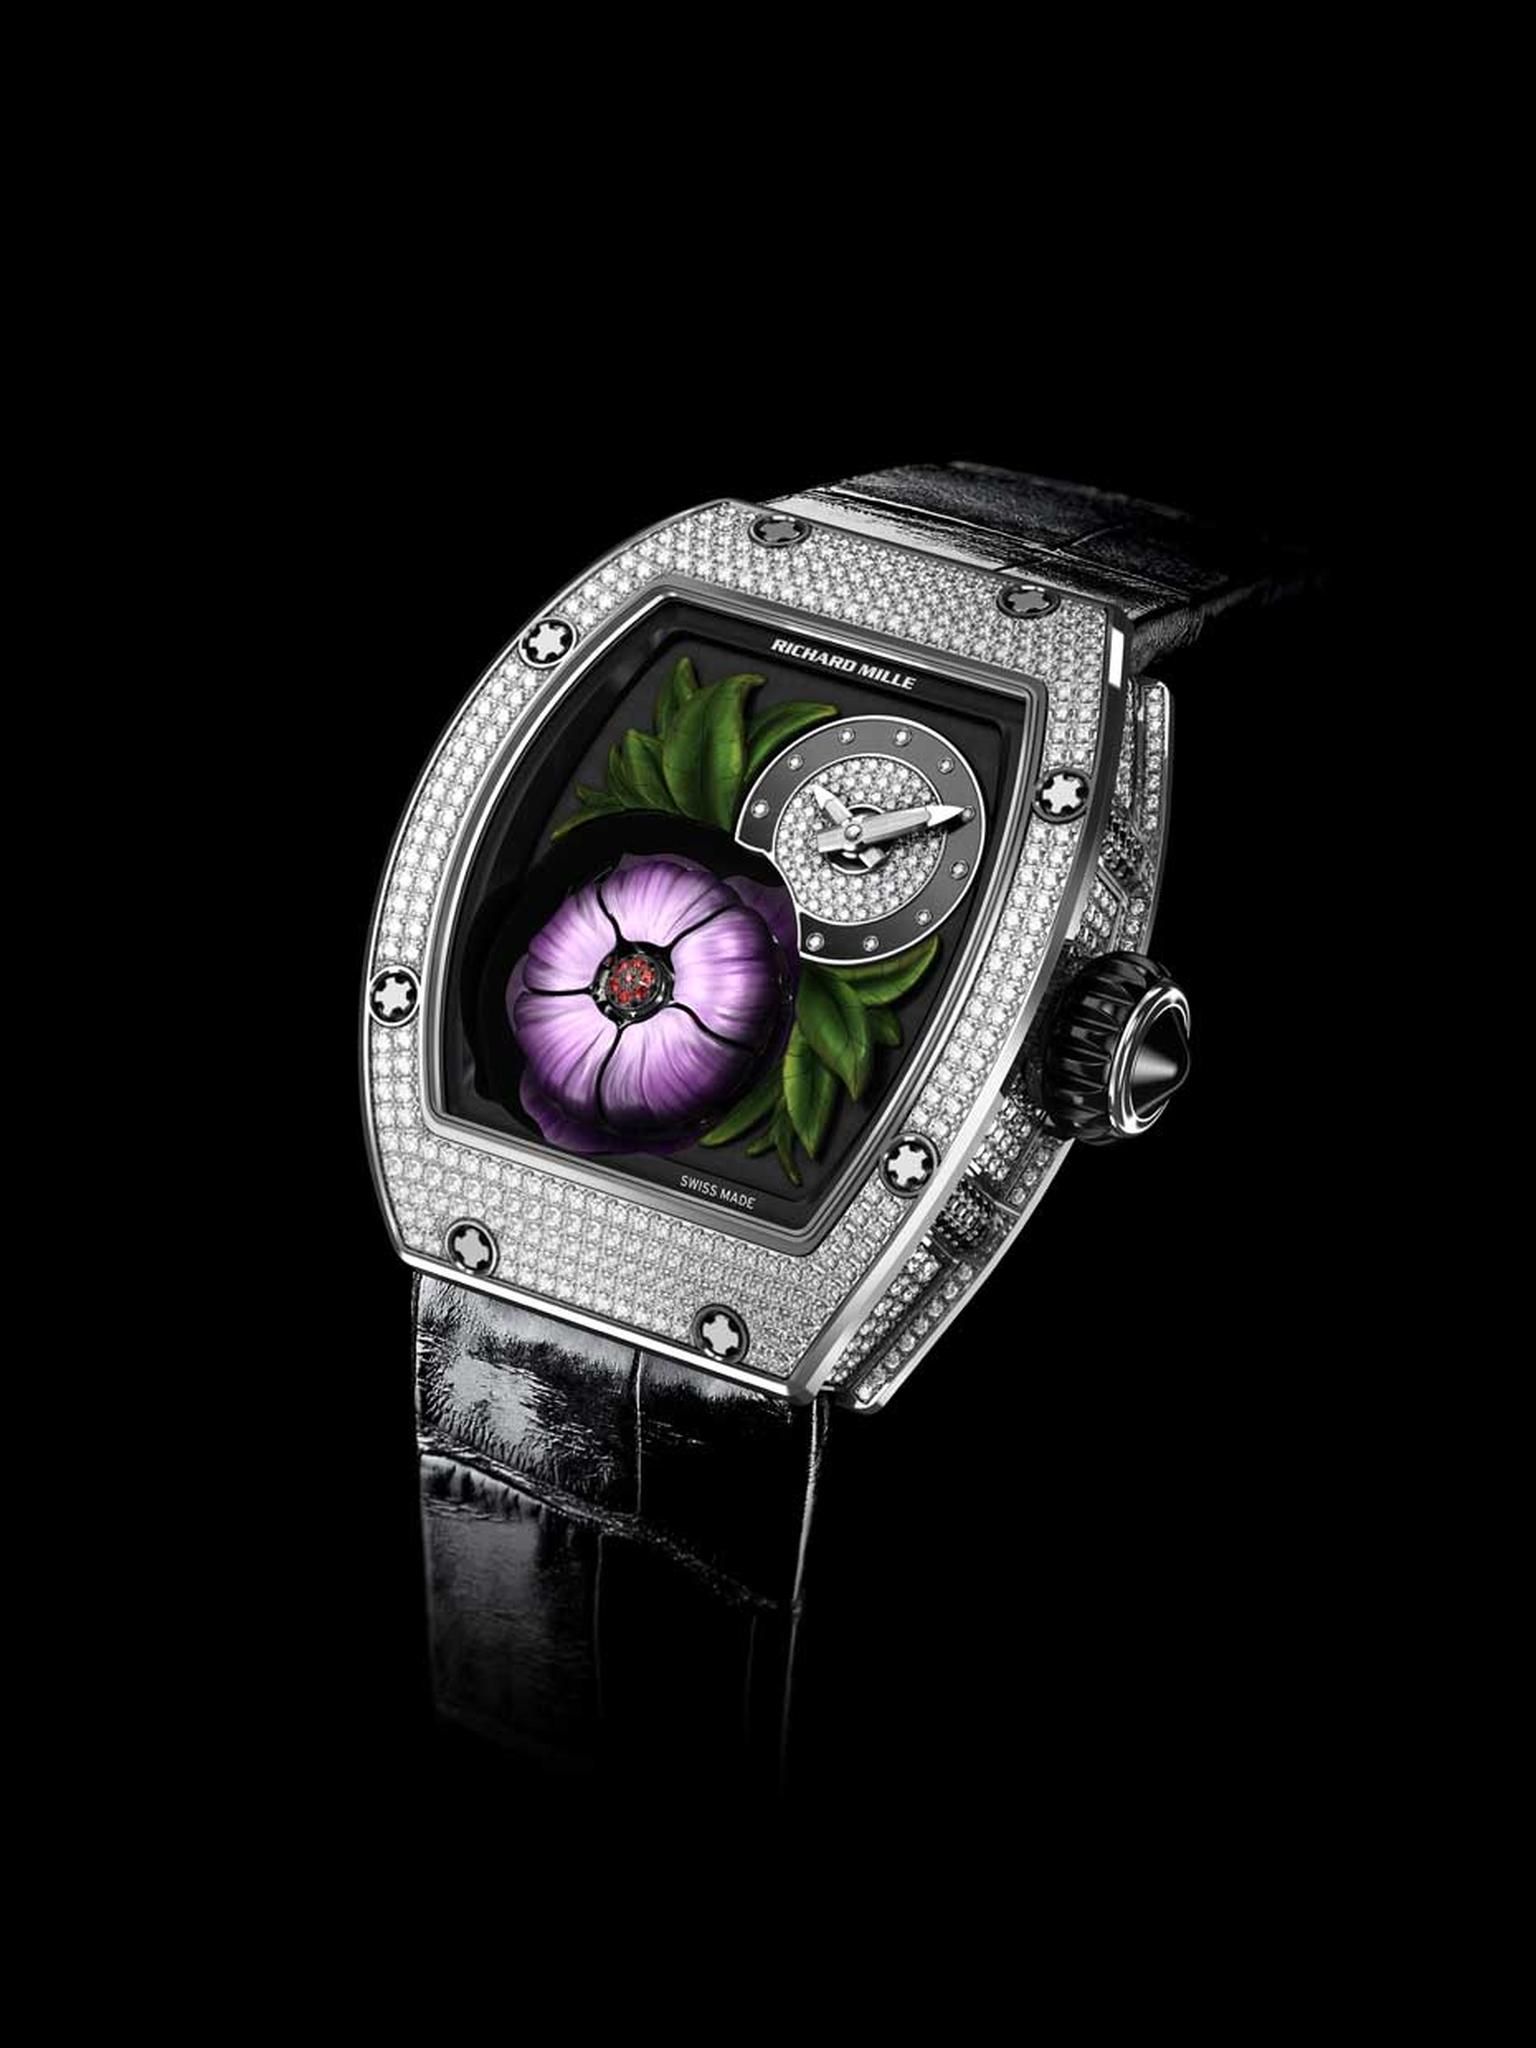 The new RM 19-02 Tourbillon Fleur watch from Richard Mille.